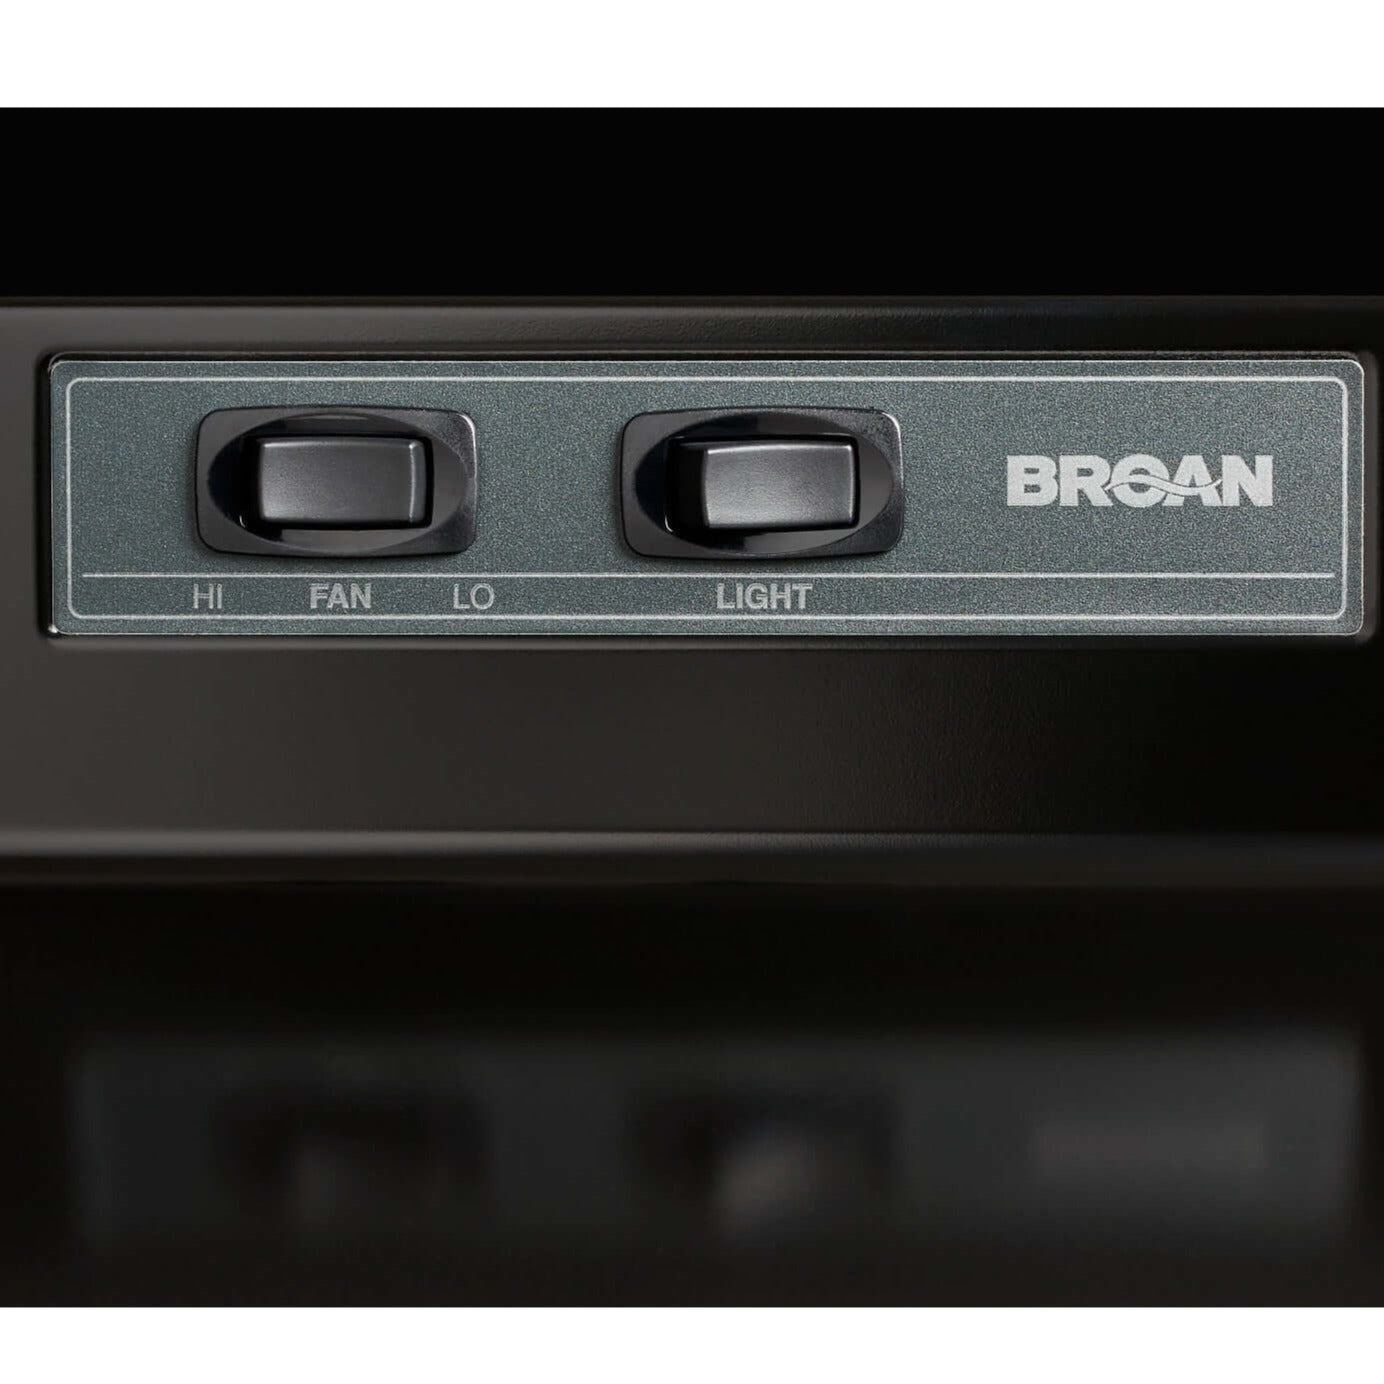 Broan 40000 Series 30 in. Under-Cabinet Range Hood with Light in Black (403023)